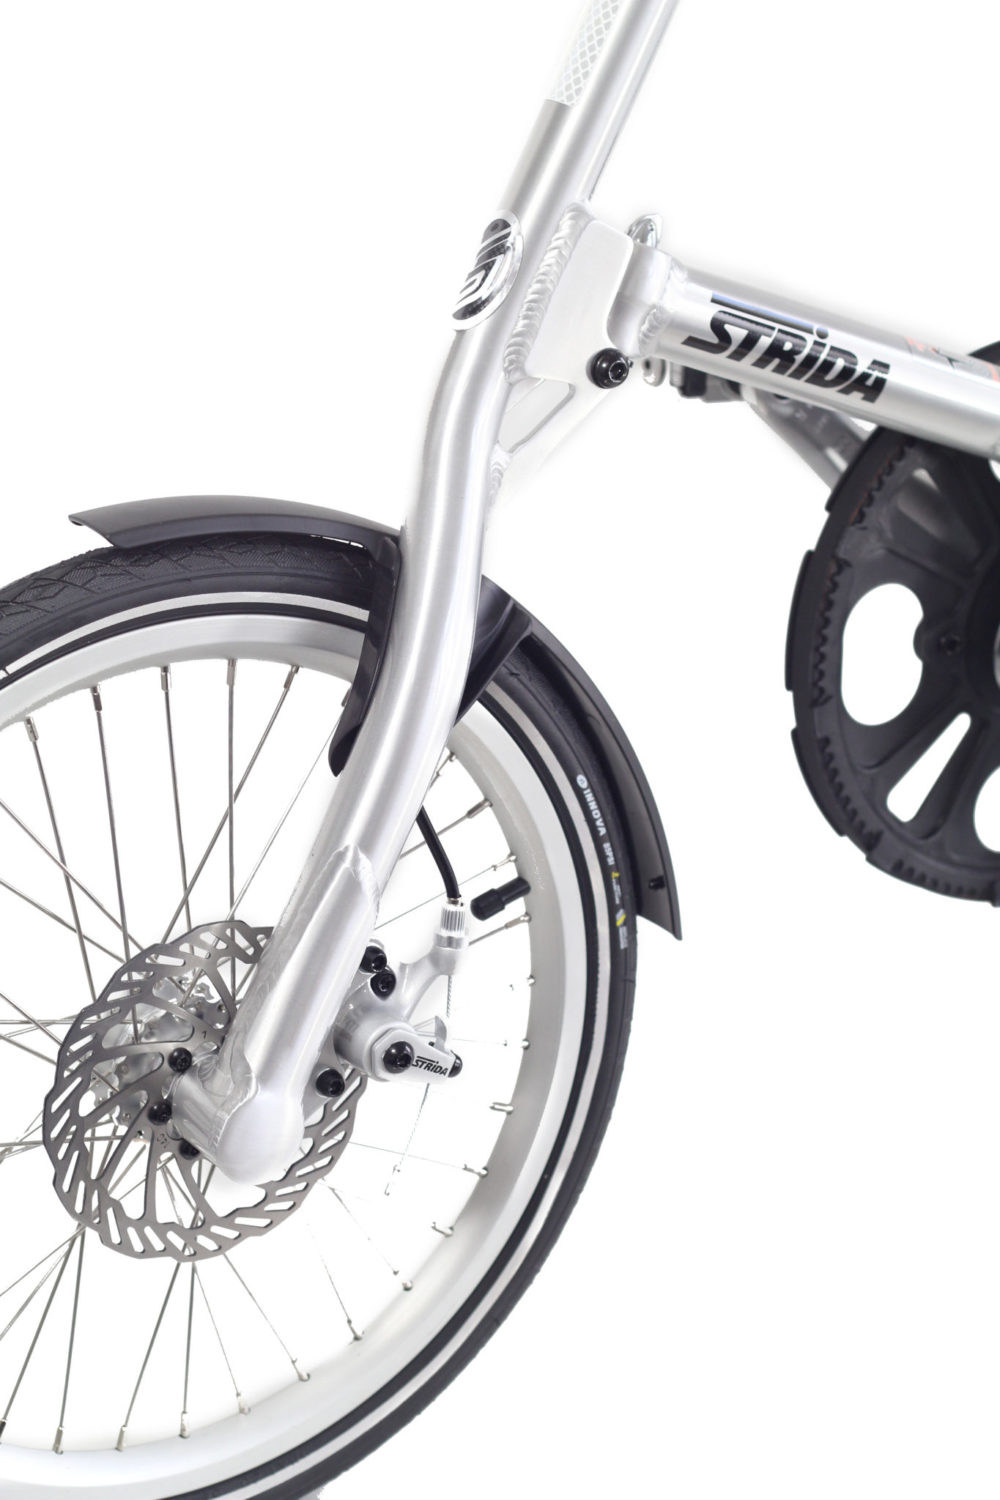 STRIDA SX Silver Brush - Silver details - 18 Zoll - de - Design Fahrrad - Design Faltrad - dreieckig - dreieckiges - Dreieckiges Faltrad - Eingang - einzigartiges Faltrad - Fahrrad - Faltbares Fahrrad - Faltbares Fahrrad kaufen - Faltbares Fahrräder kaufen - Faltrad - Faltrad-Shop - Falträder - Falträder kaufen - Geschäft - Kaufen - Klapprad - Klapprad kaufen - Leicht - neu - strida - Strida design Faltrad - sx - zu verkaufen - zusammenklappbares Fahrrad